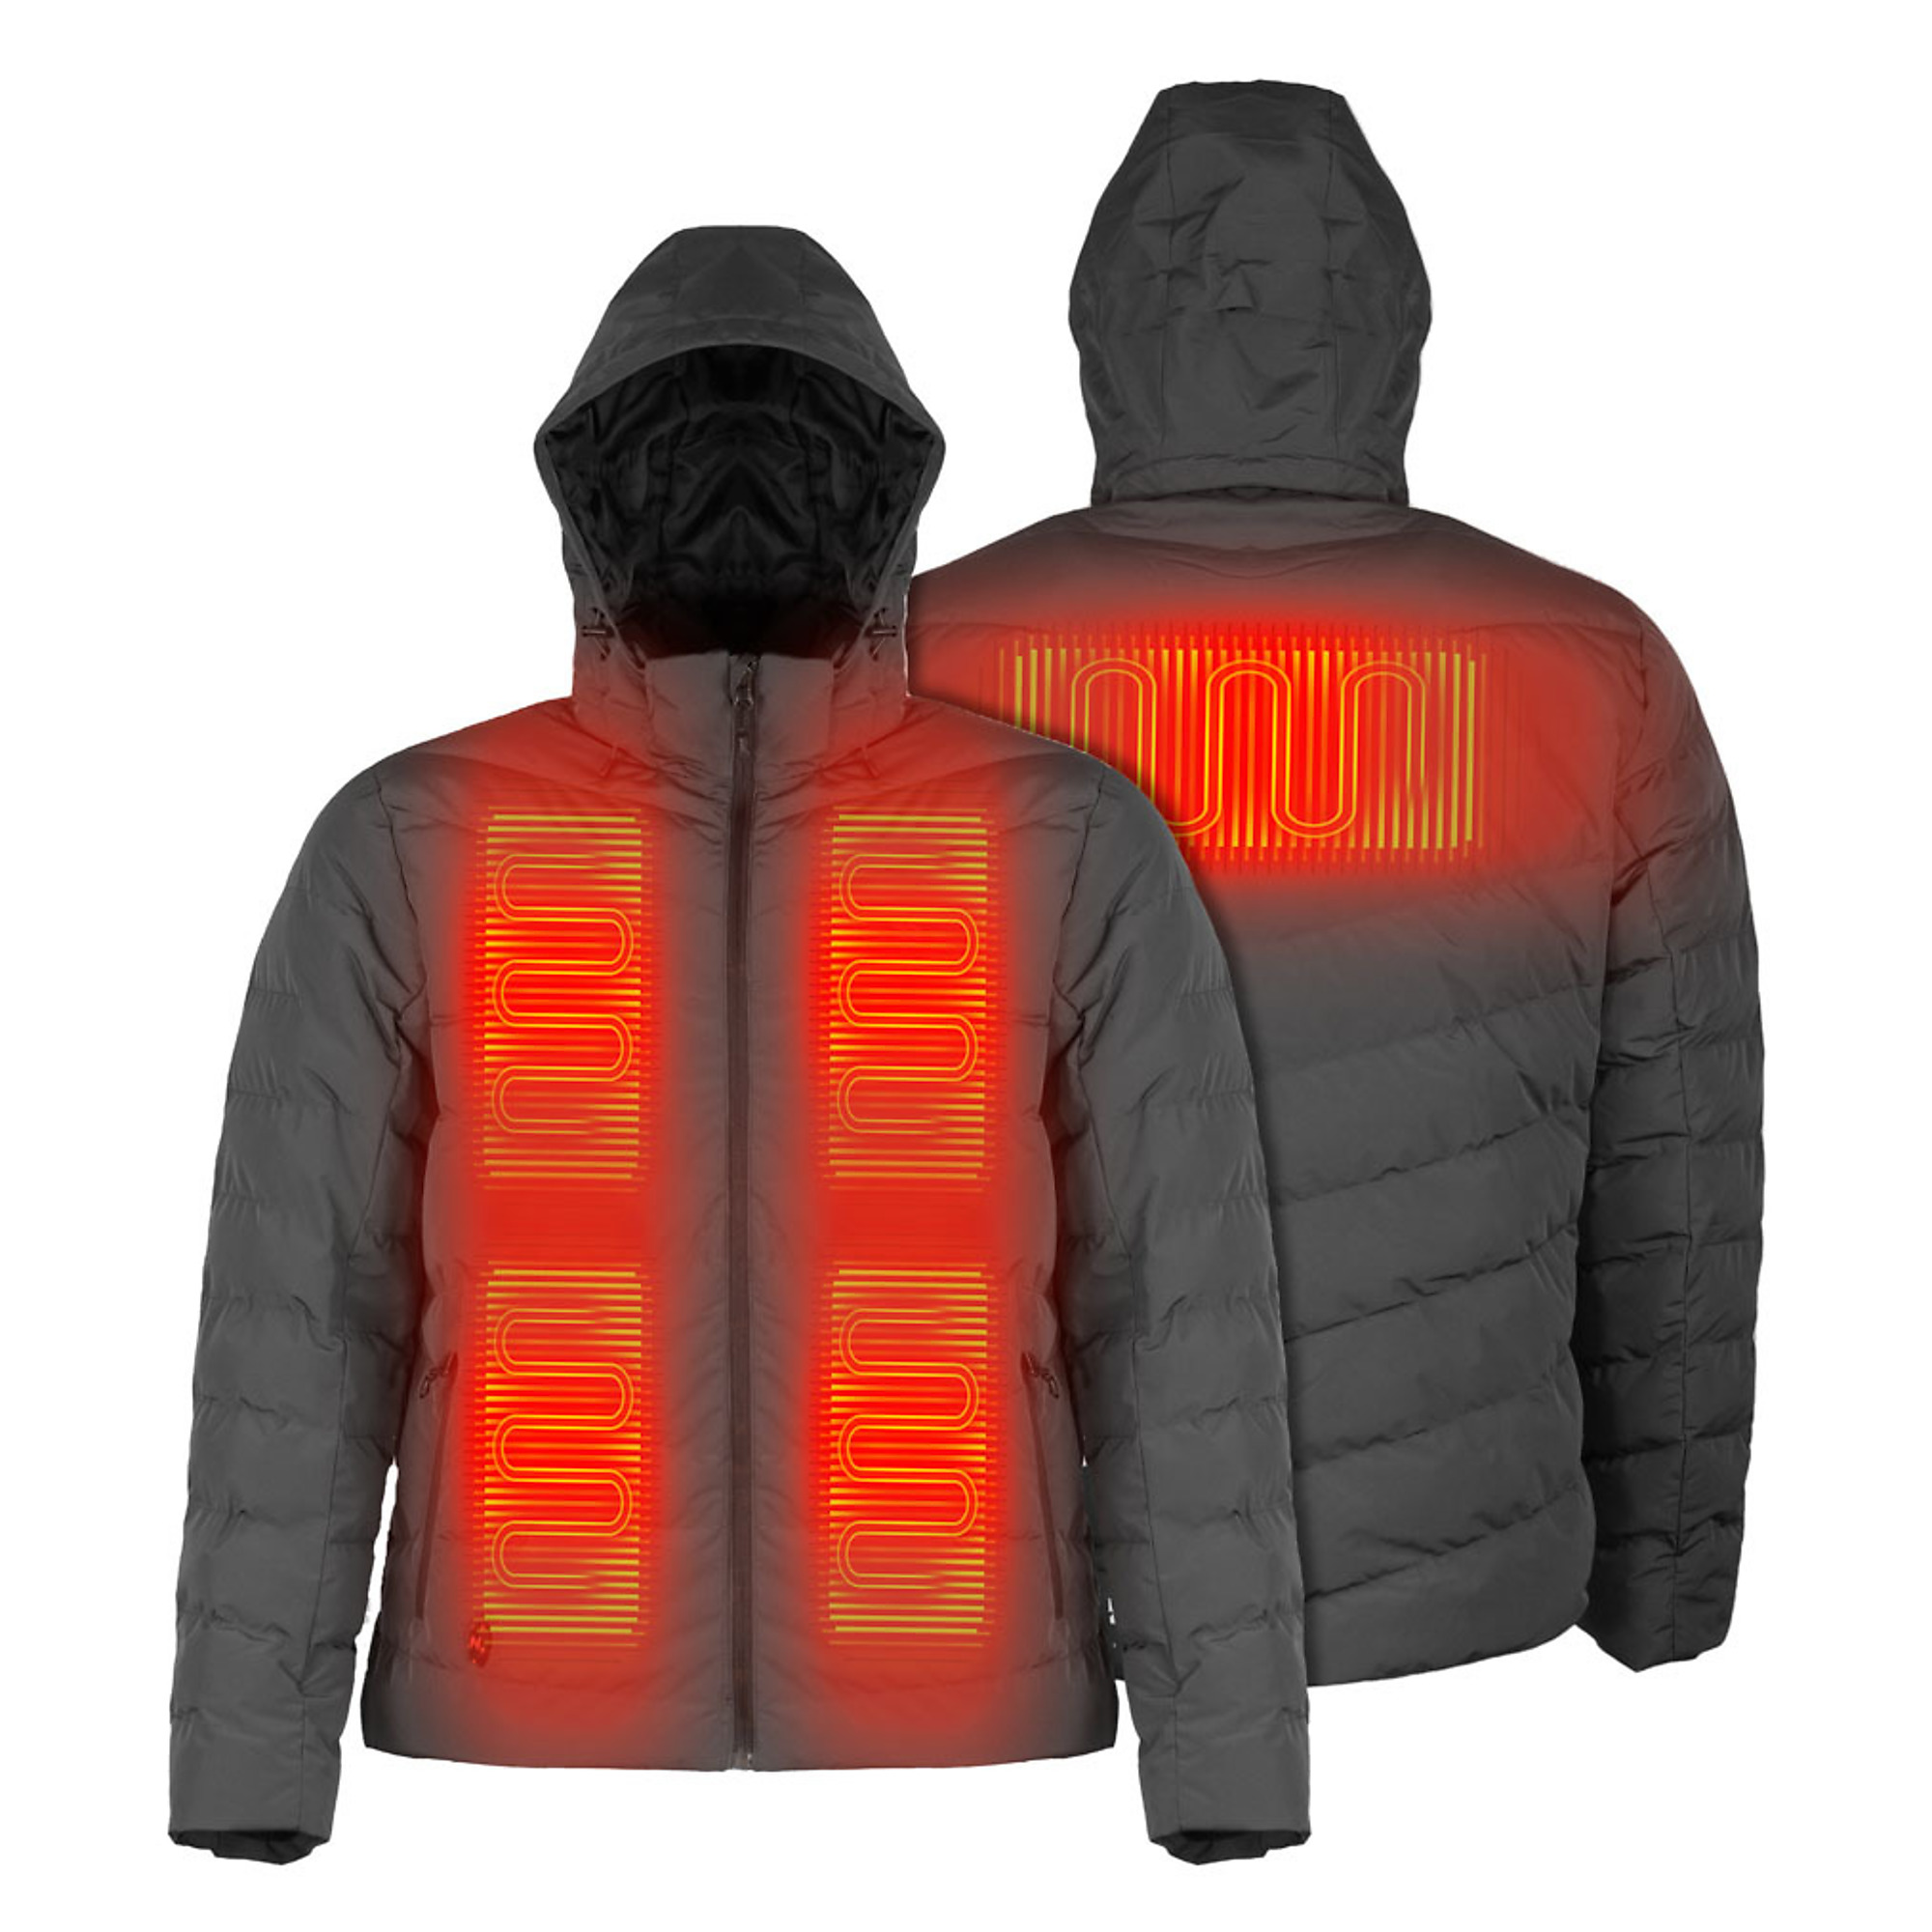 Fieldsheer, Men's Crest Heated Jacket with 7.4v Battery, Size 2XL, Color Black, Model MWMJ37010622